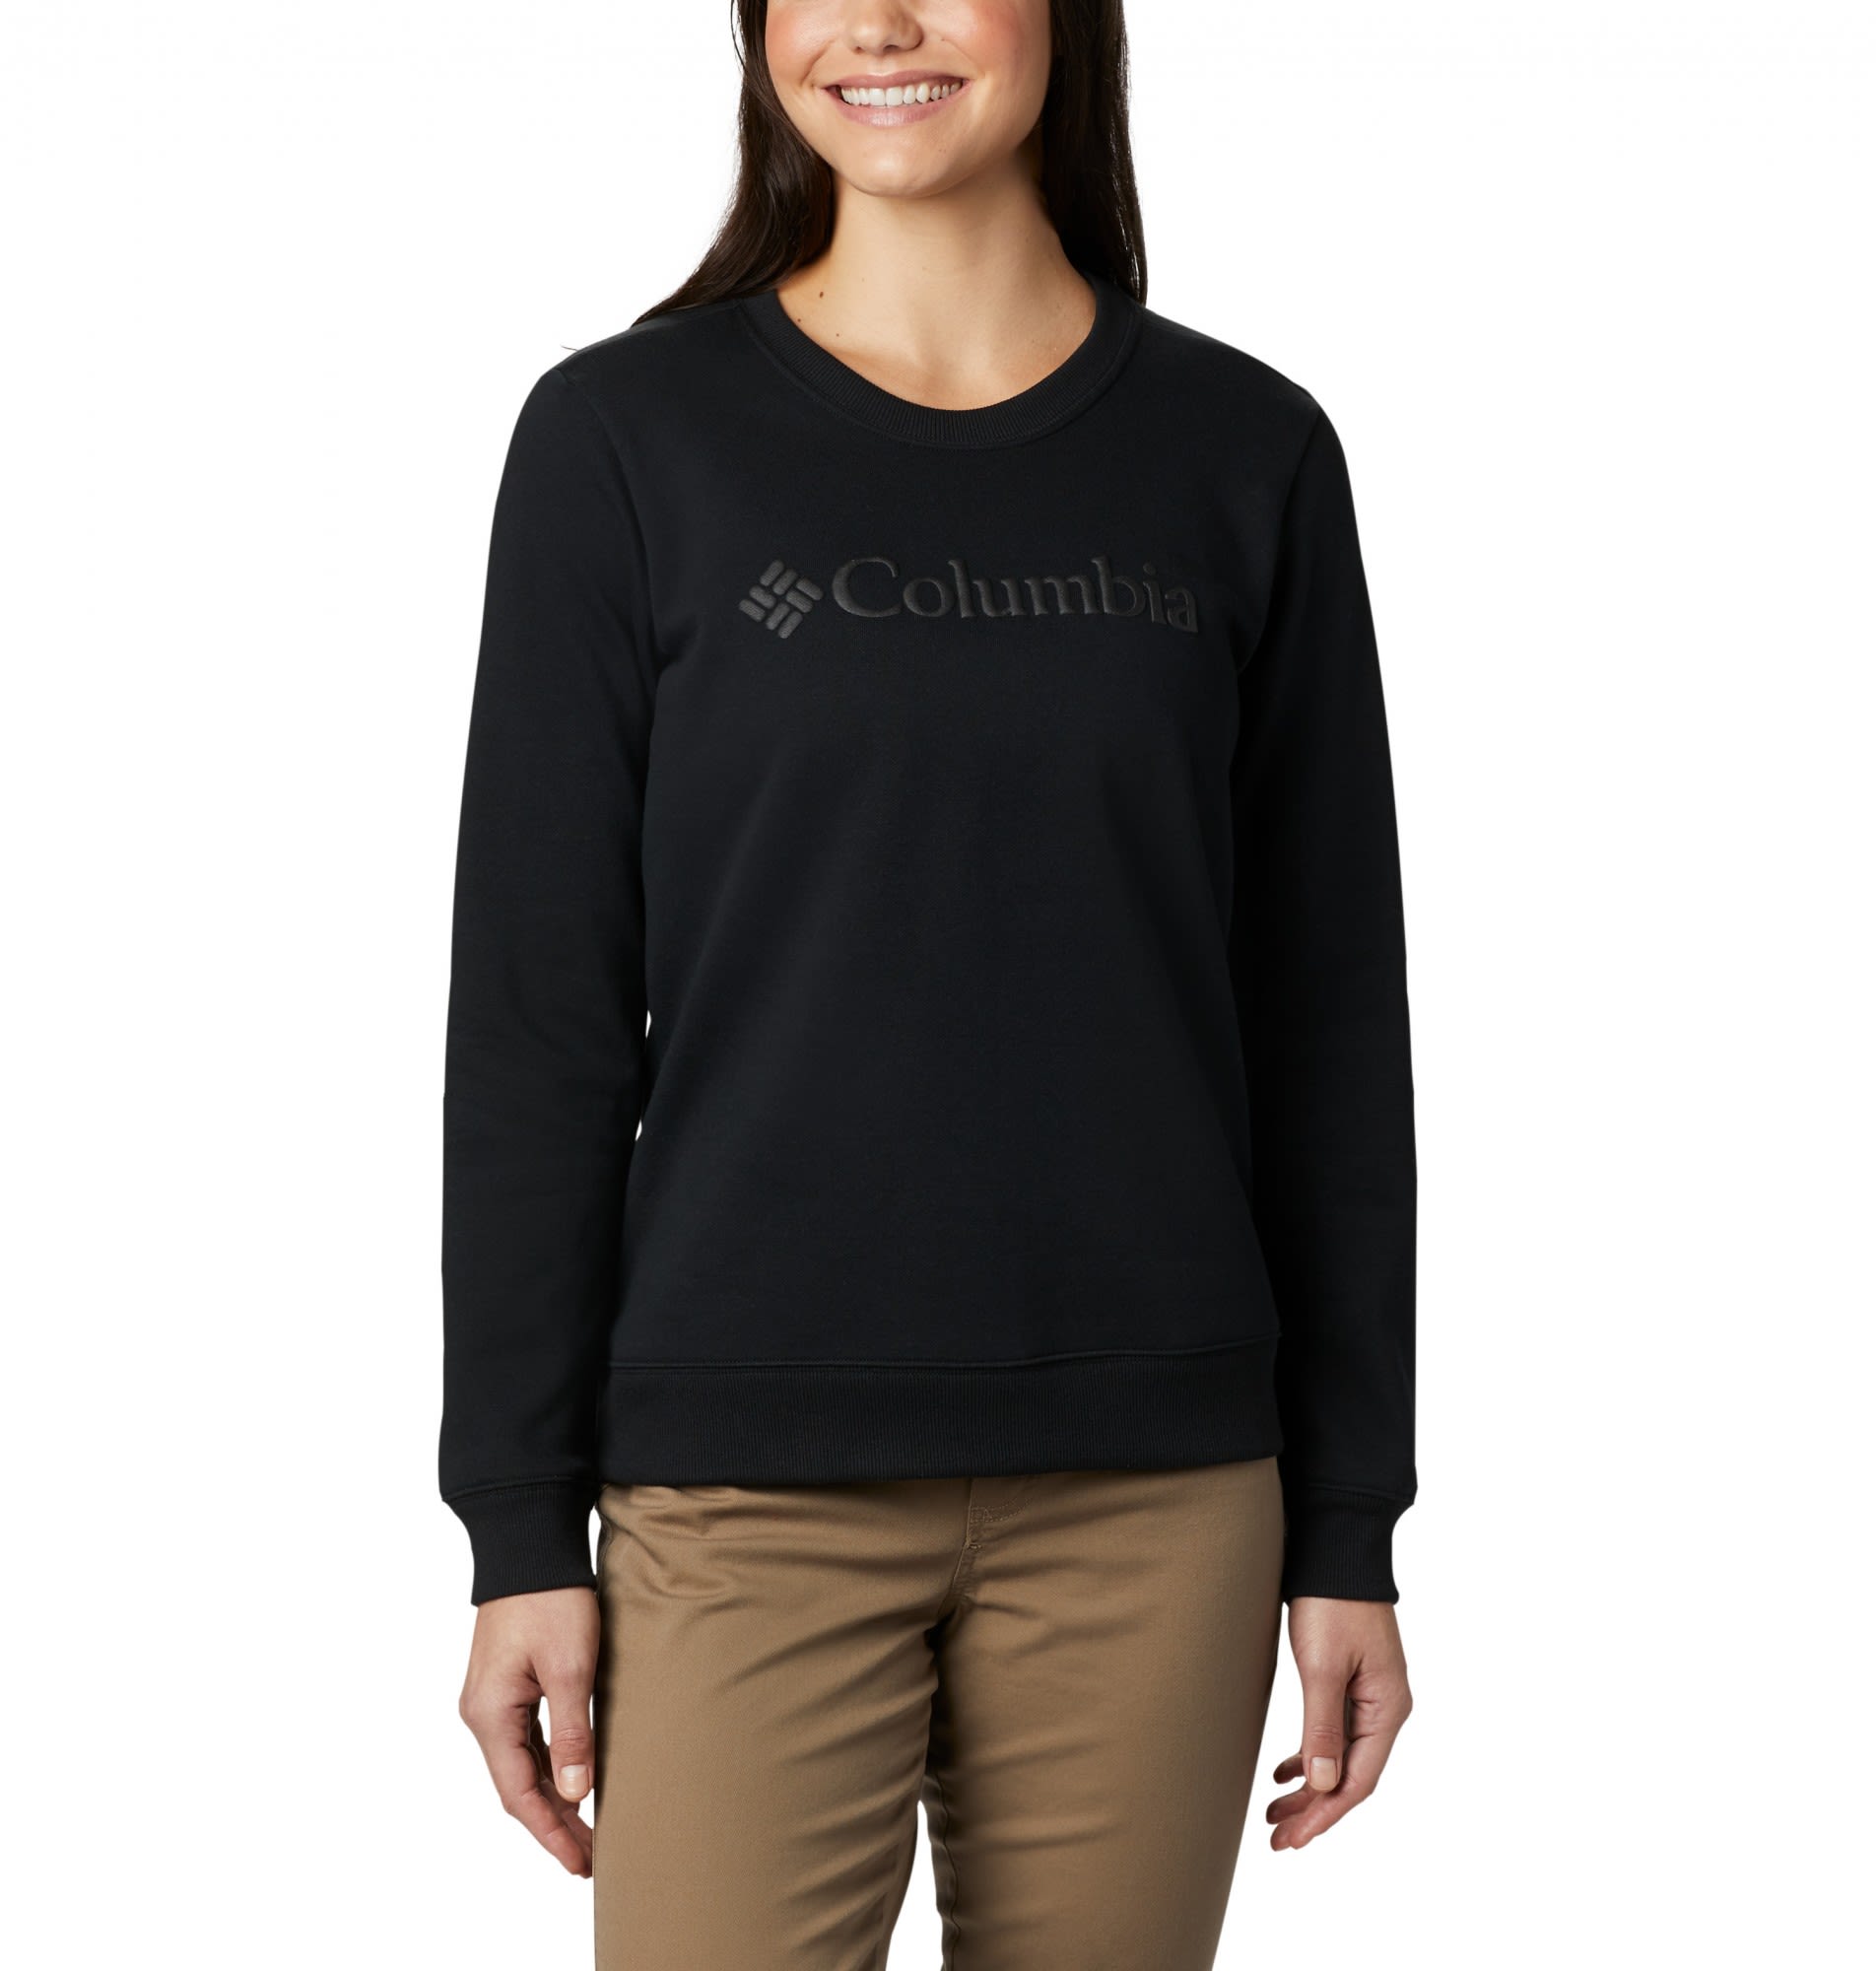 Columbia Logo Crew Schwarz- Female Sweaters und Hoodies- Grsse XL - Farbe Black unter Columbia